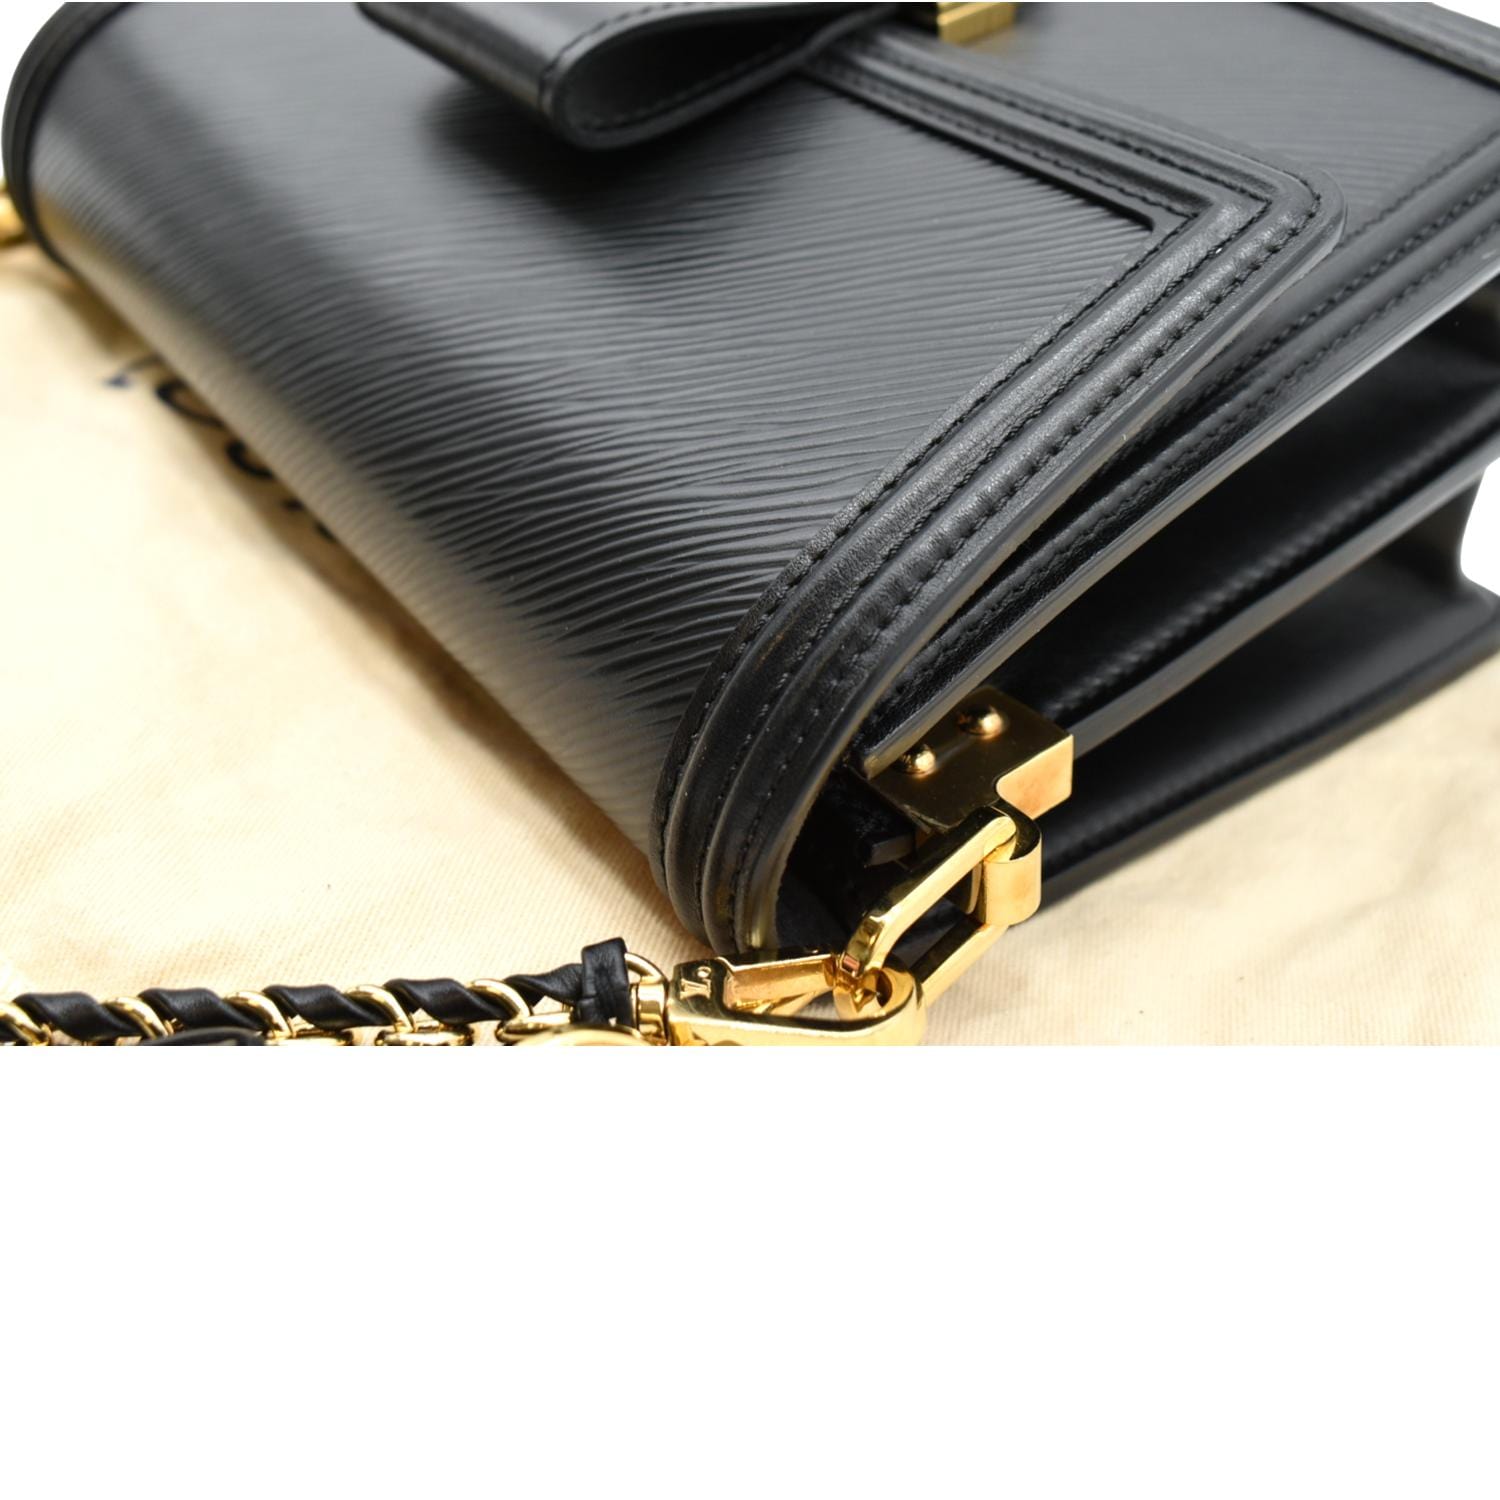 Dauphine MM Fashion Leather - Handbags M23488